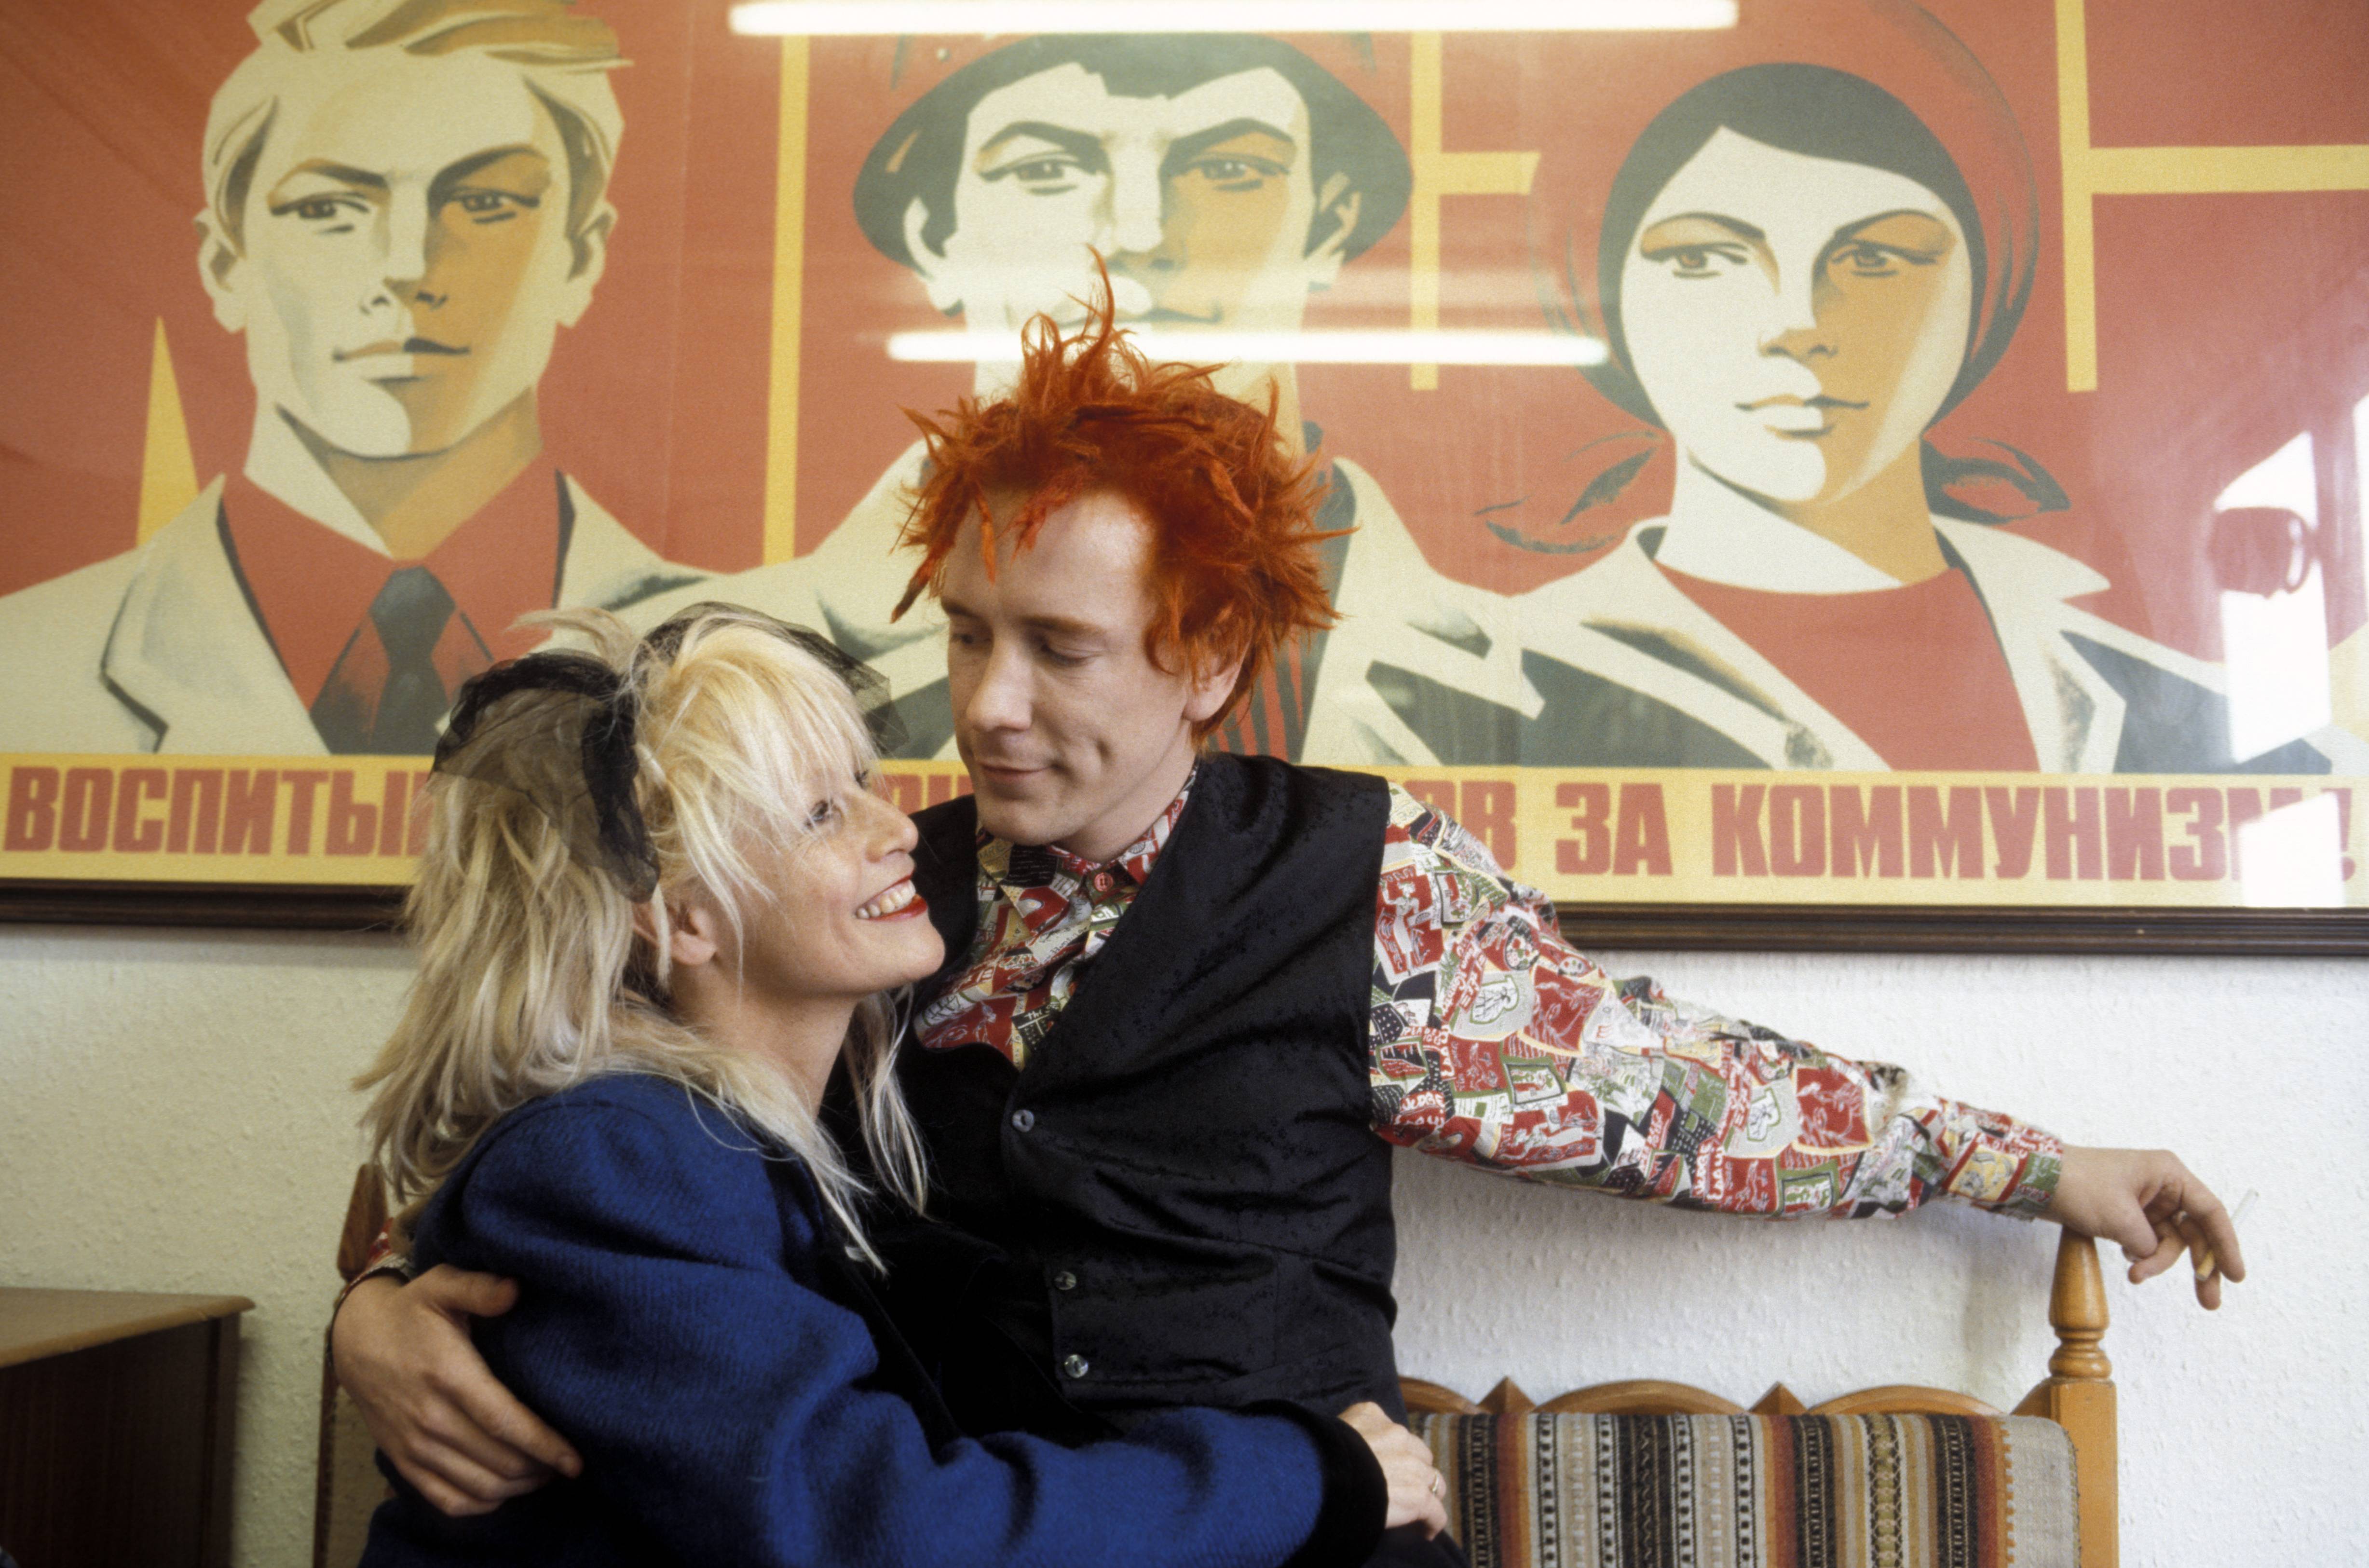 Johnny Rotten O vocalista dos Sex Pistols que deixou o punk para cuidar da esposa com Alzheimer Estilo EL PAÍS Brasil